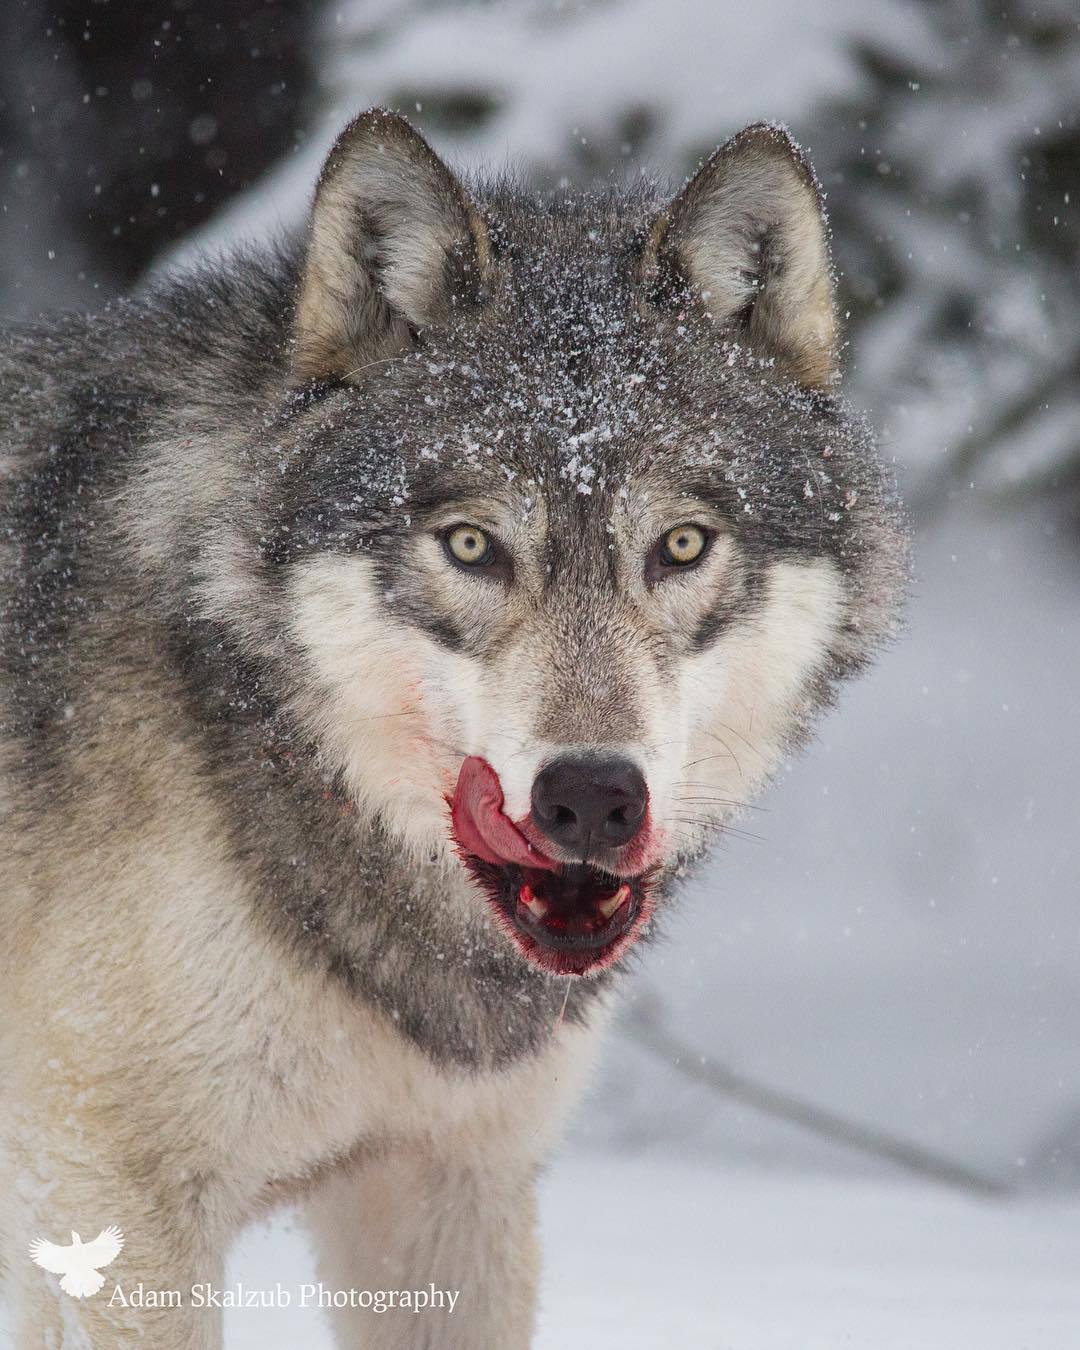 wolfsheart-blog:
“Wild Timber Wolf by Adam Skalzub
”